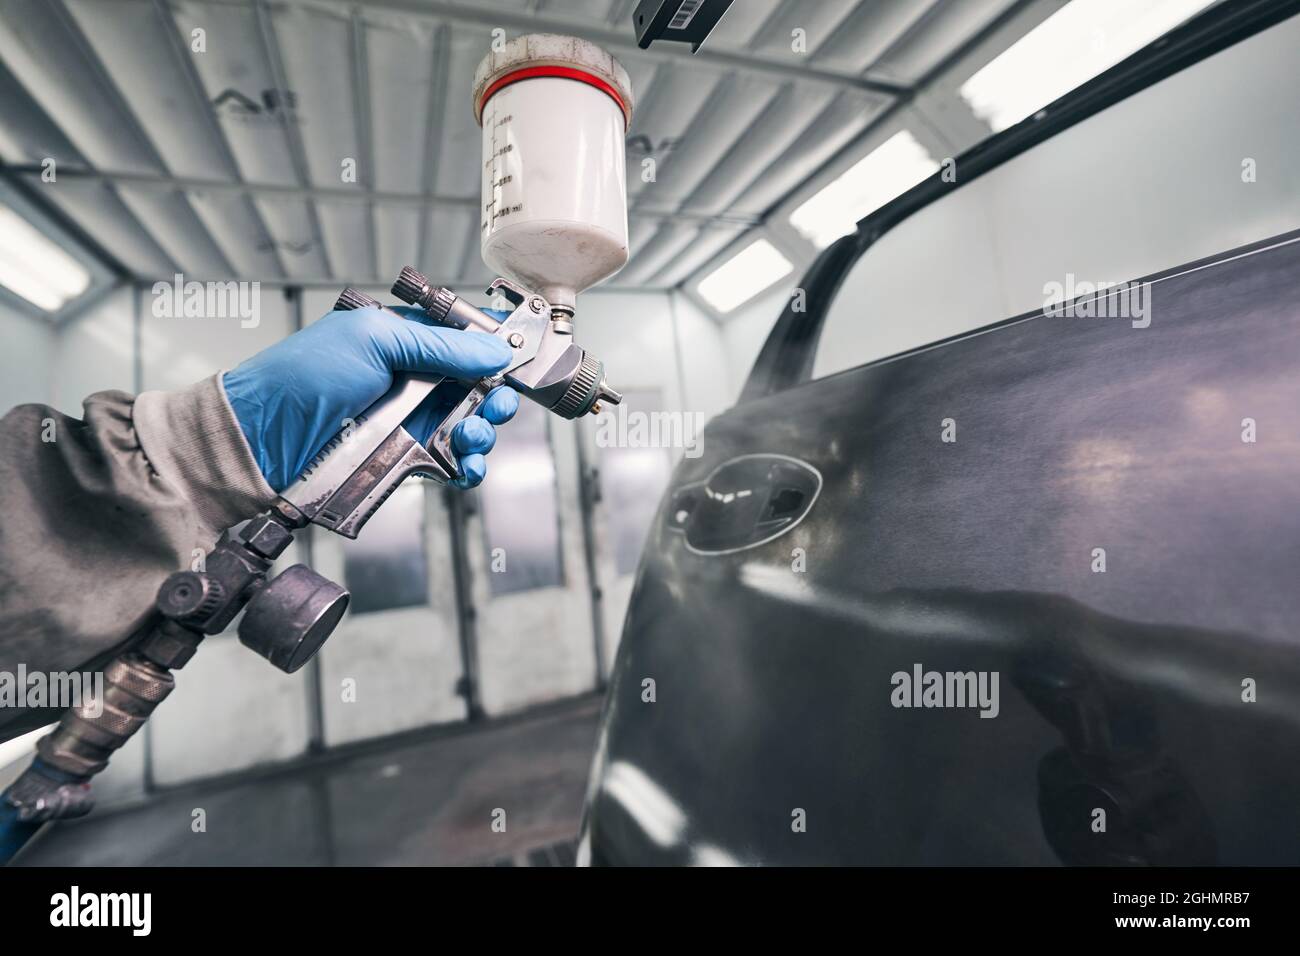 Auto workshop worker painting car door with spraying pistol Stock Photo